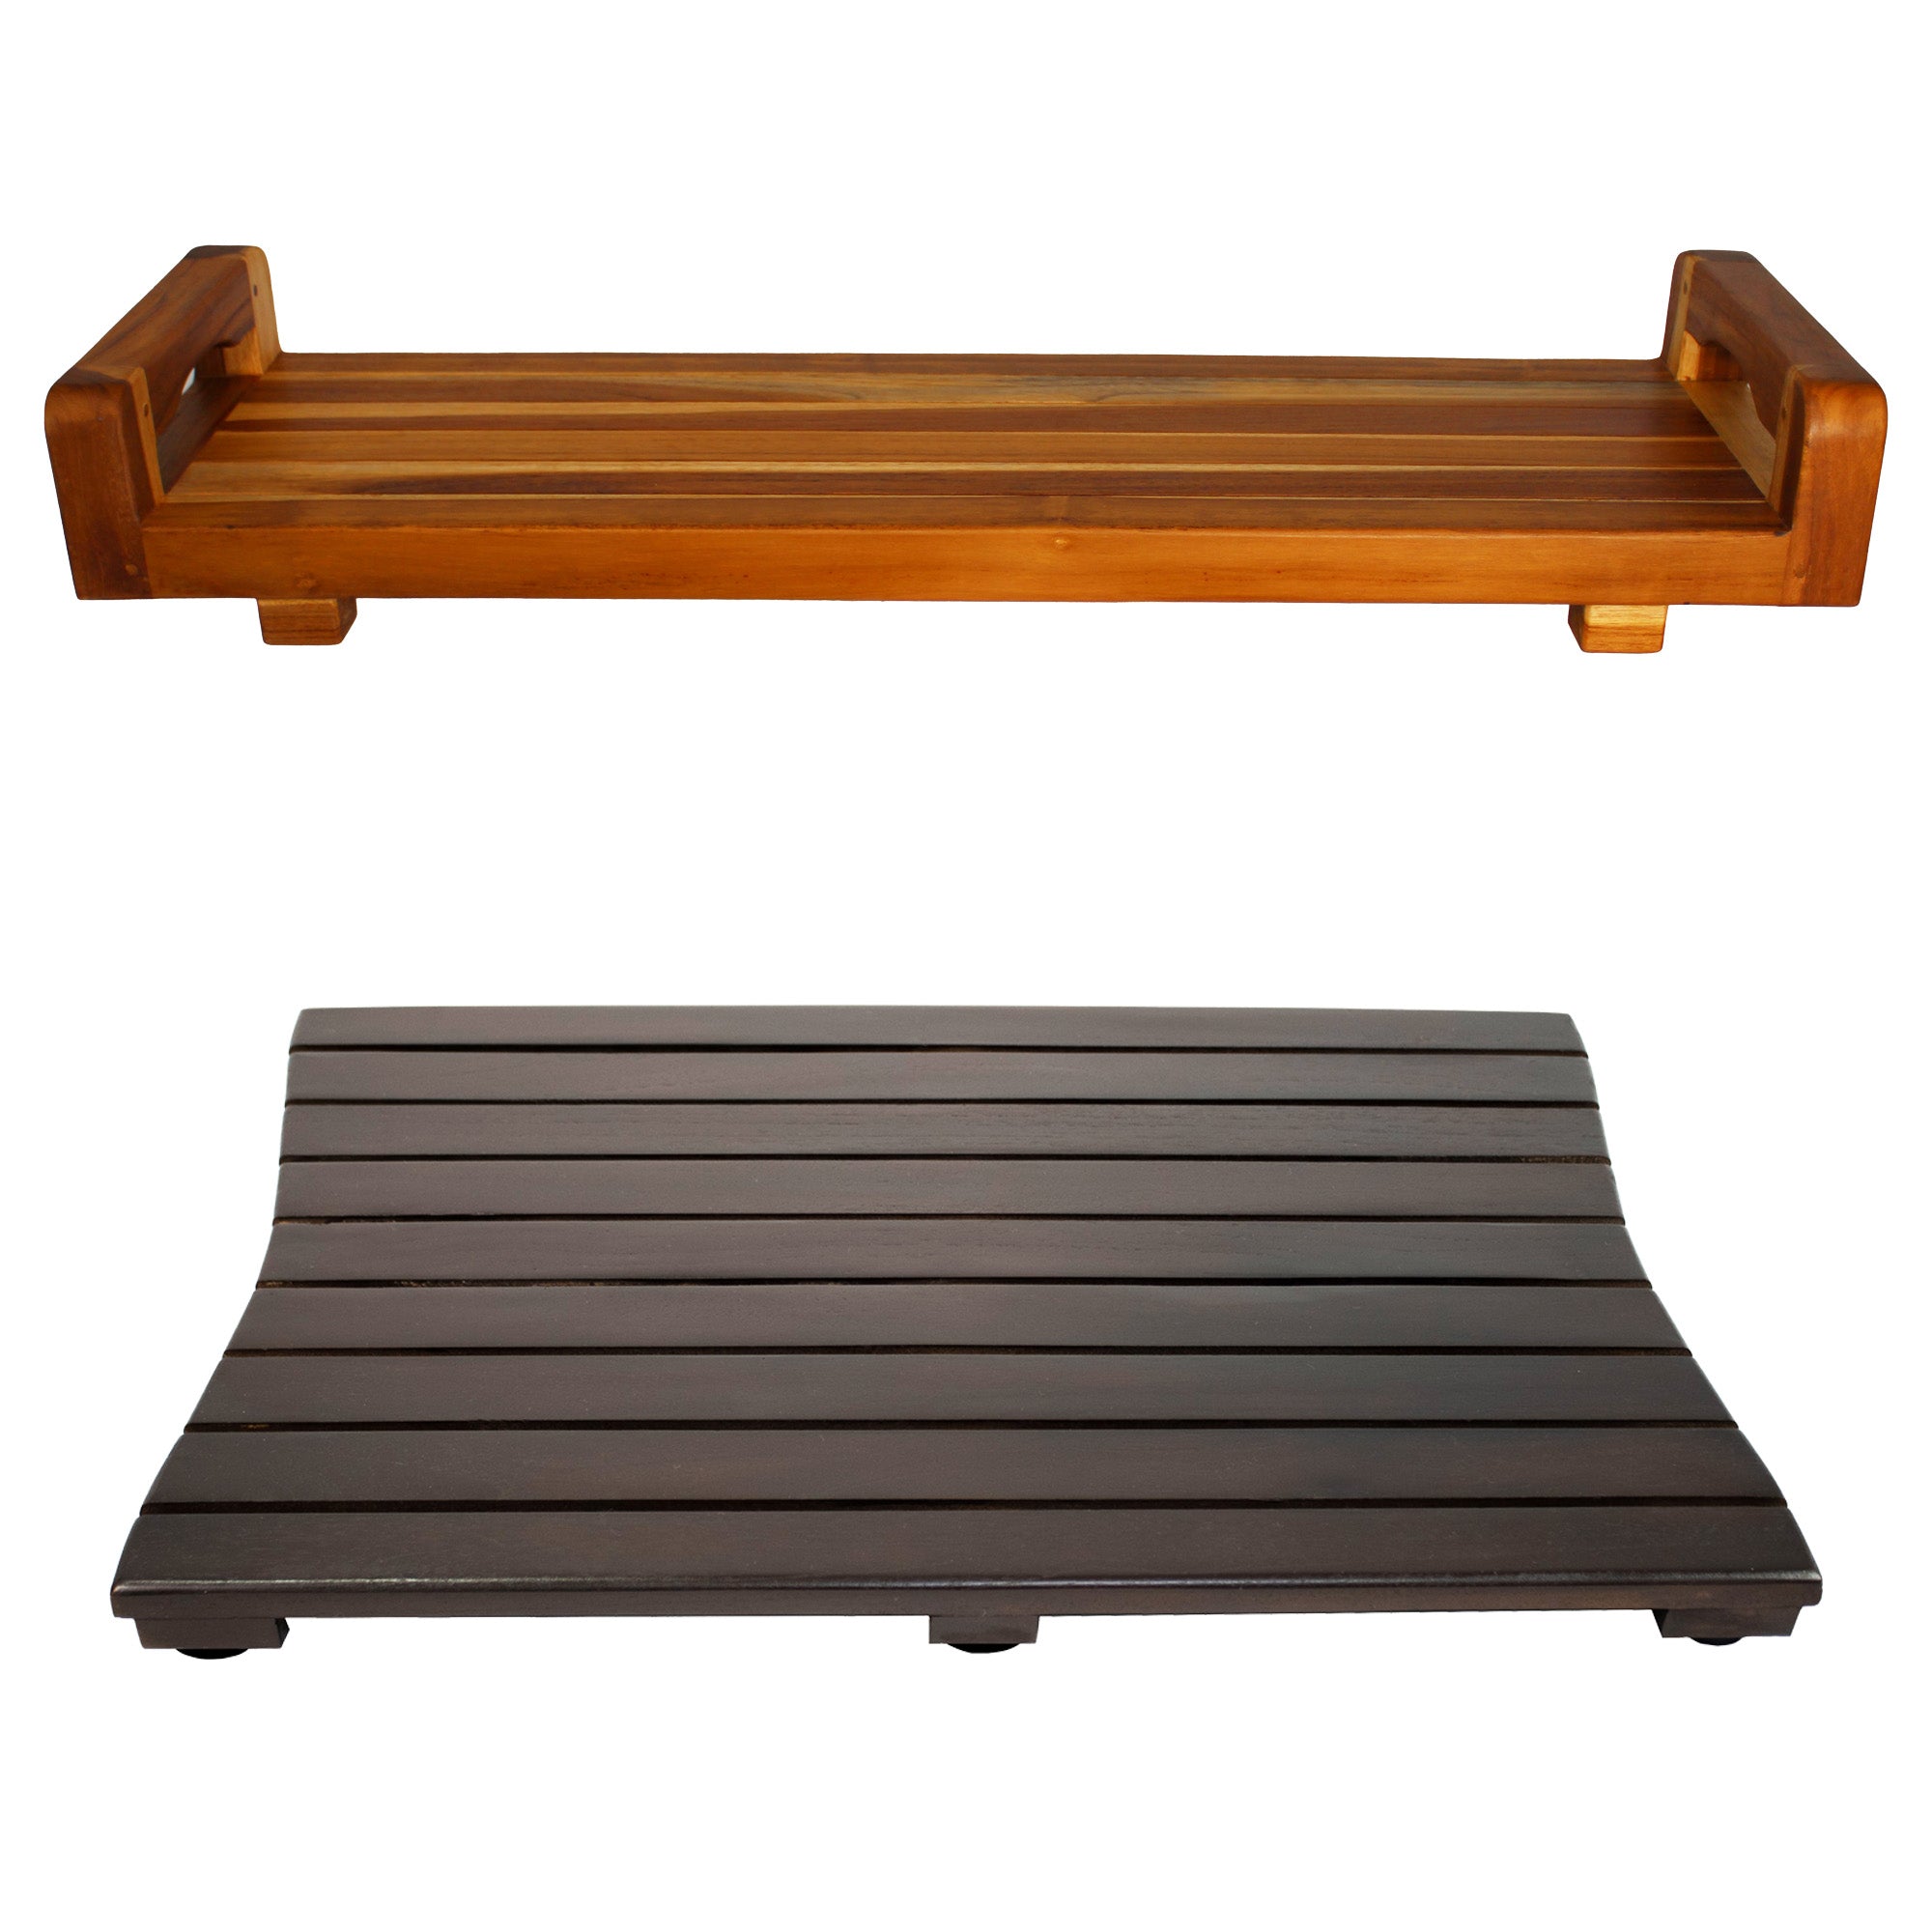 Eleganto® 34” Teak Bath Tray with LiftAide® in EarthyTeak® Finish - DecoTeak® Eleganto® 23”W Teak Floor Mat in a Woodland Brown Finish